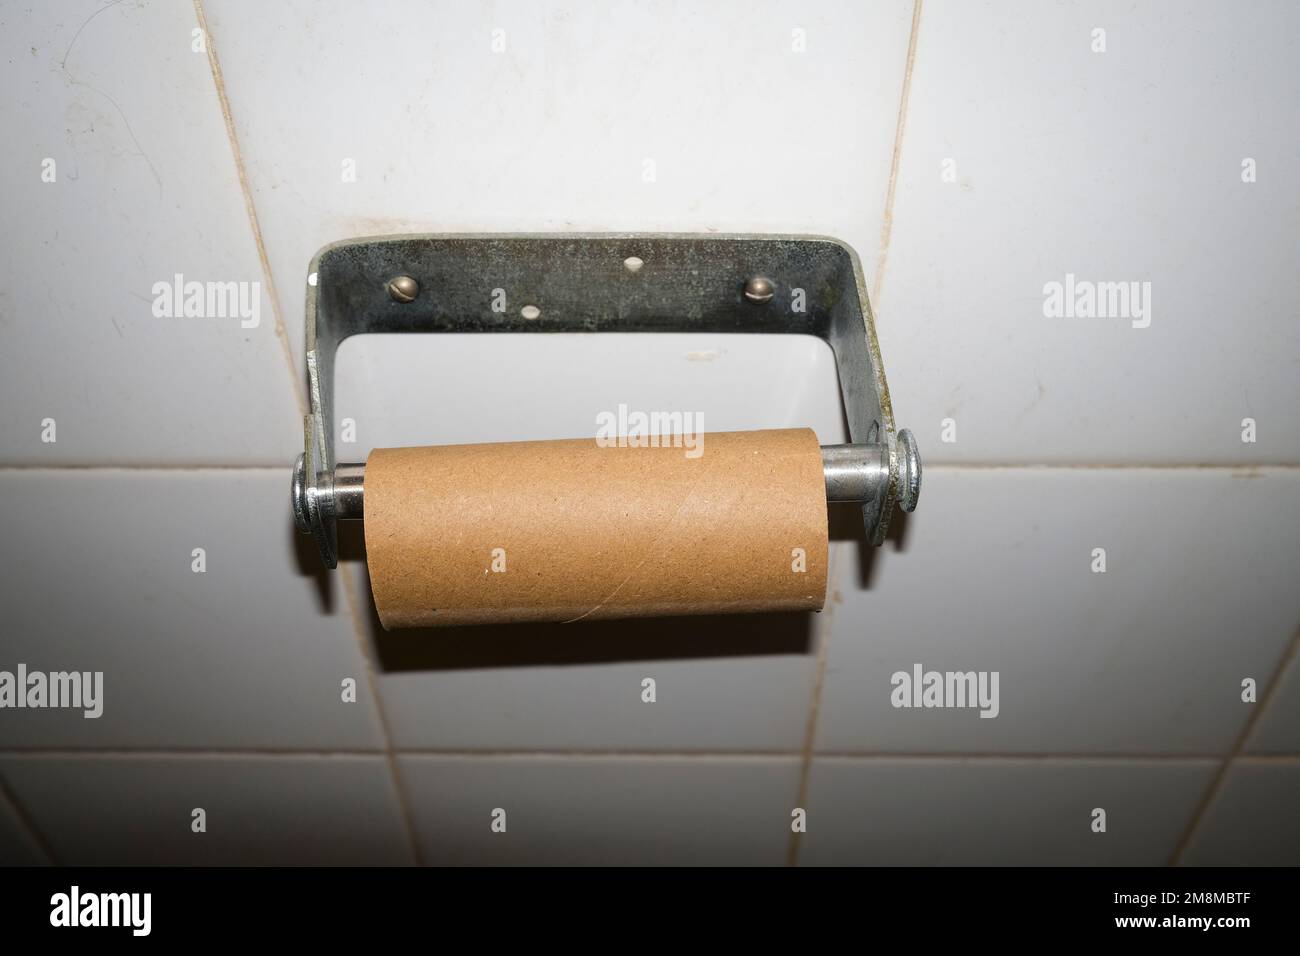 Empty toilet paper roll holder Stock Photo